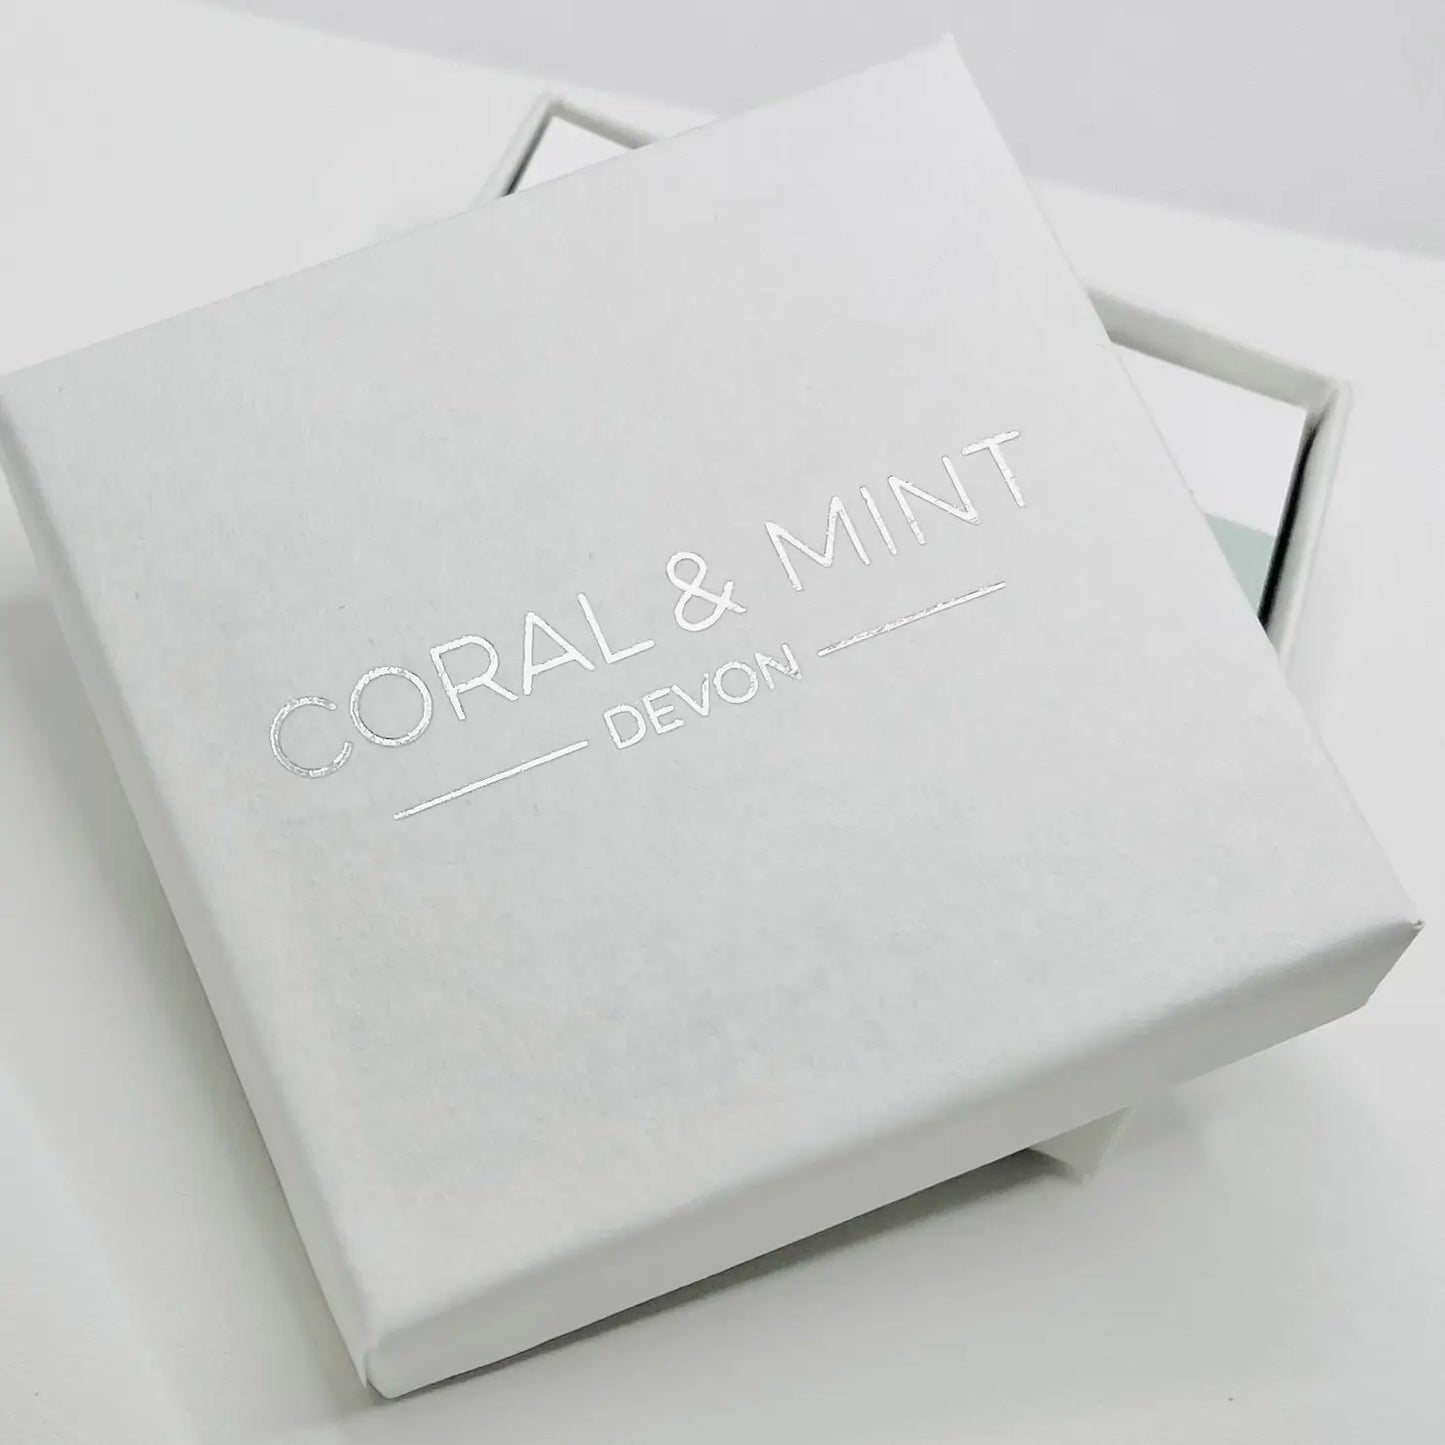 Coral & Mint gift box - Eve & Flamingo